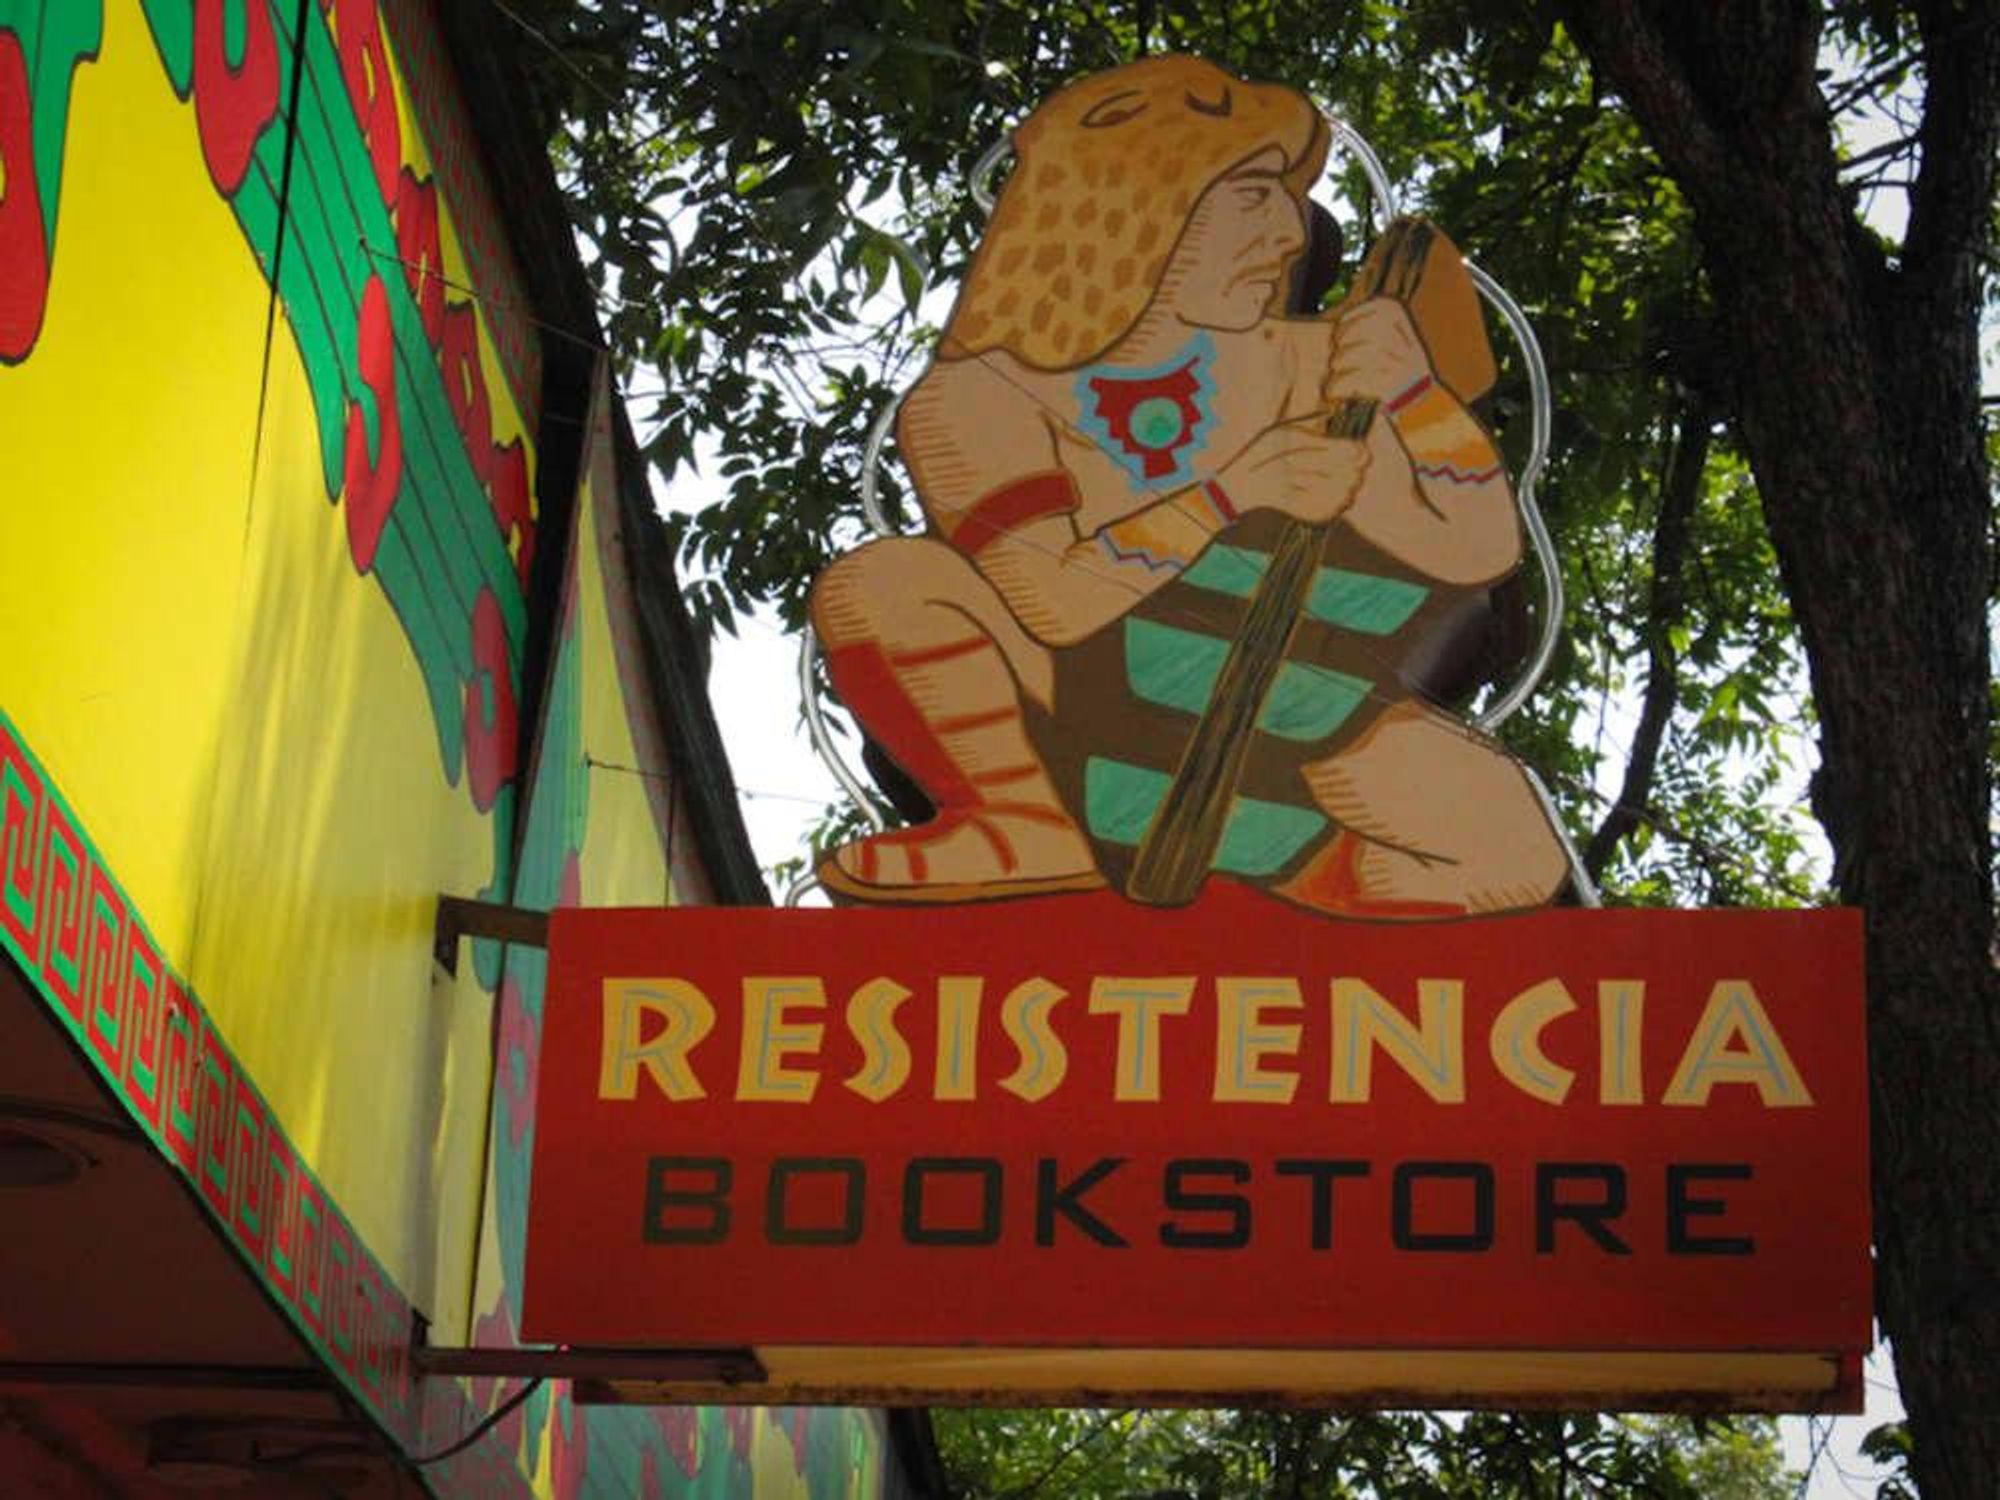 Austin Photo Set: News_gabino_resistencia bookstore_may 2012_2